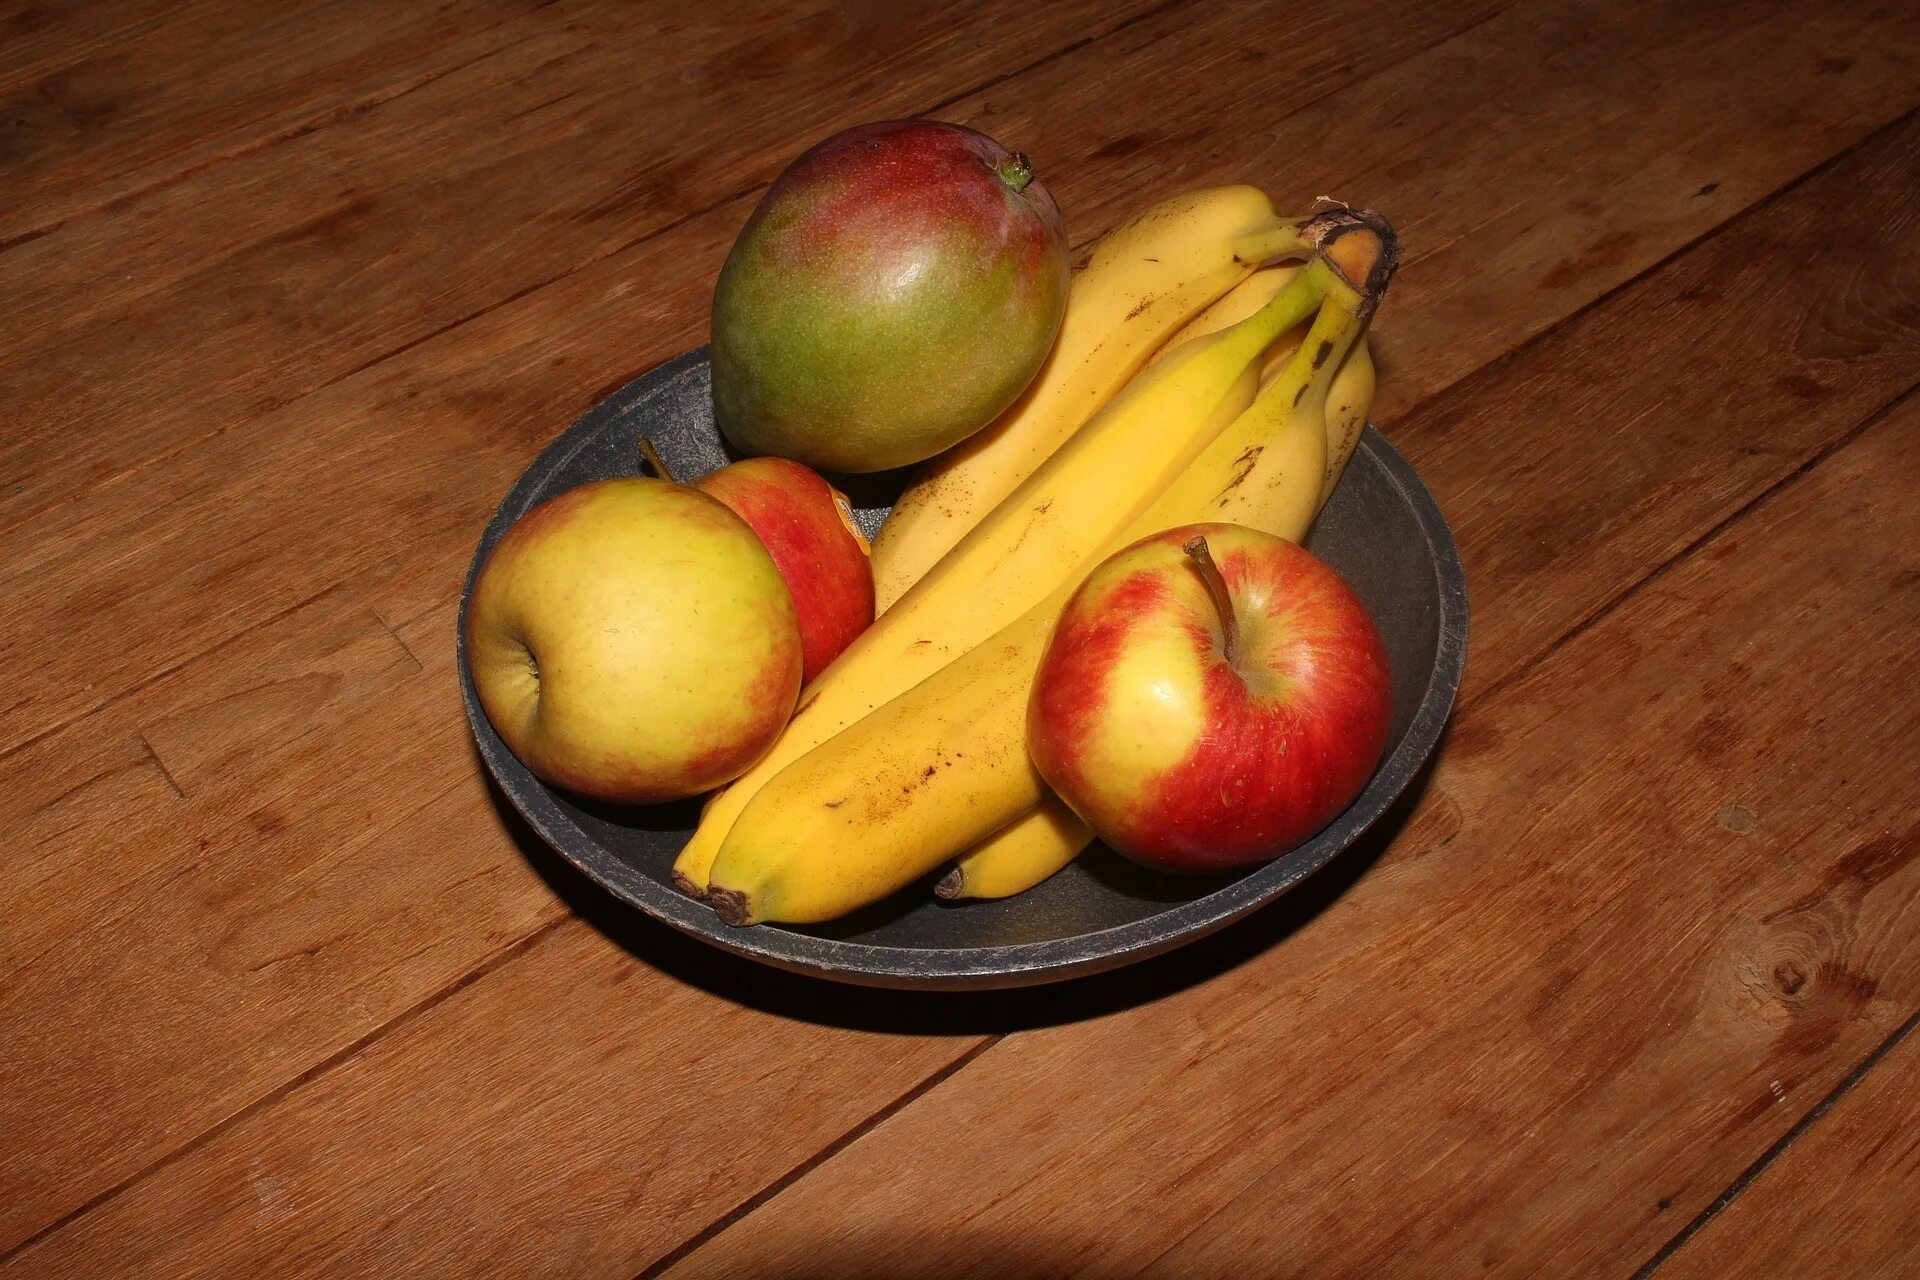 I like bananas apples. Яблоки и бананы. Яблоко груша банан. Натюрморт с бананами. Яблоко и банан на столе.